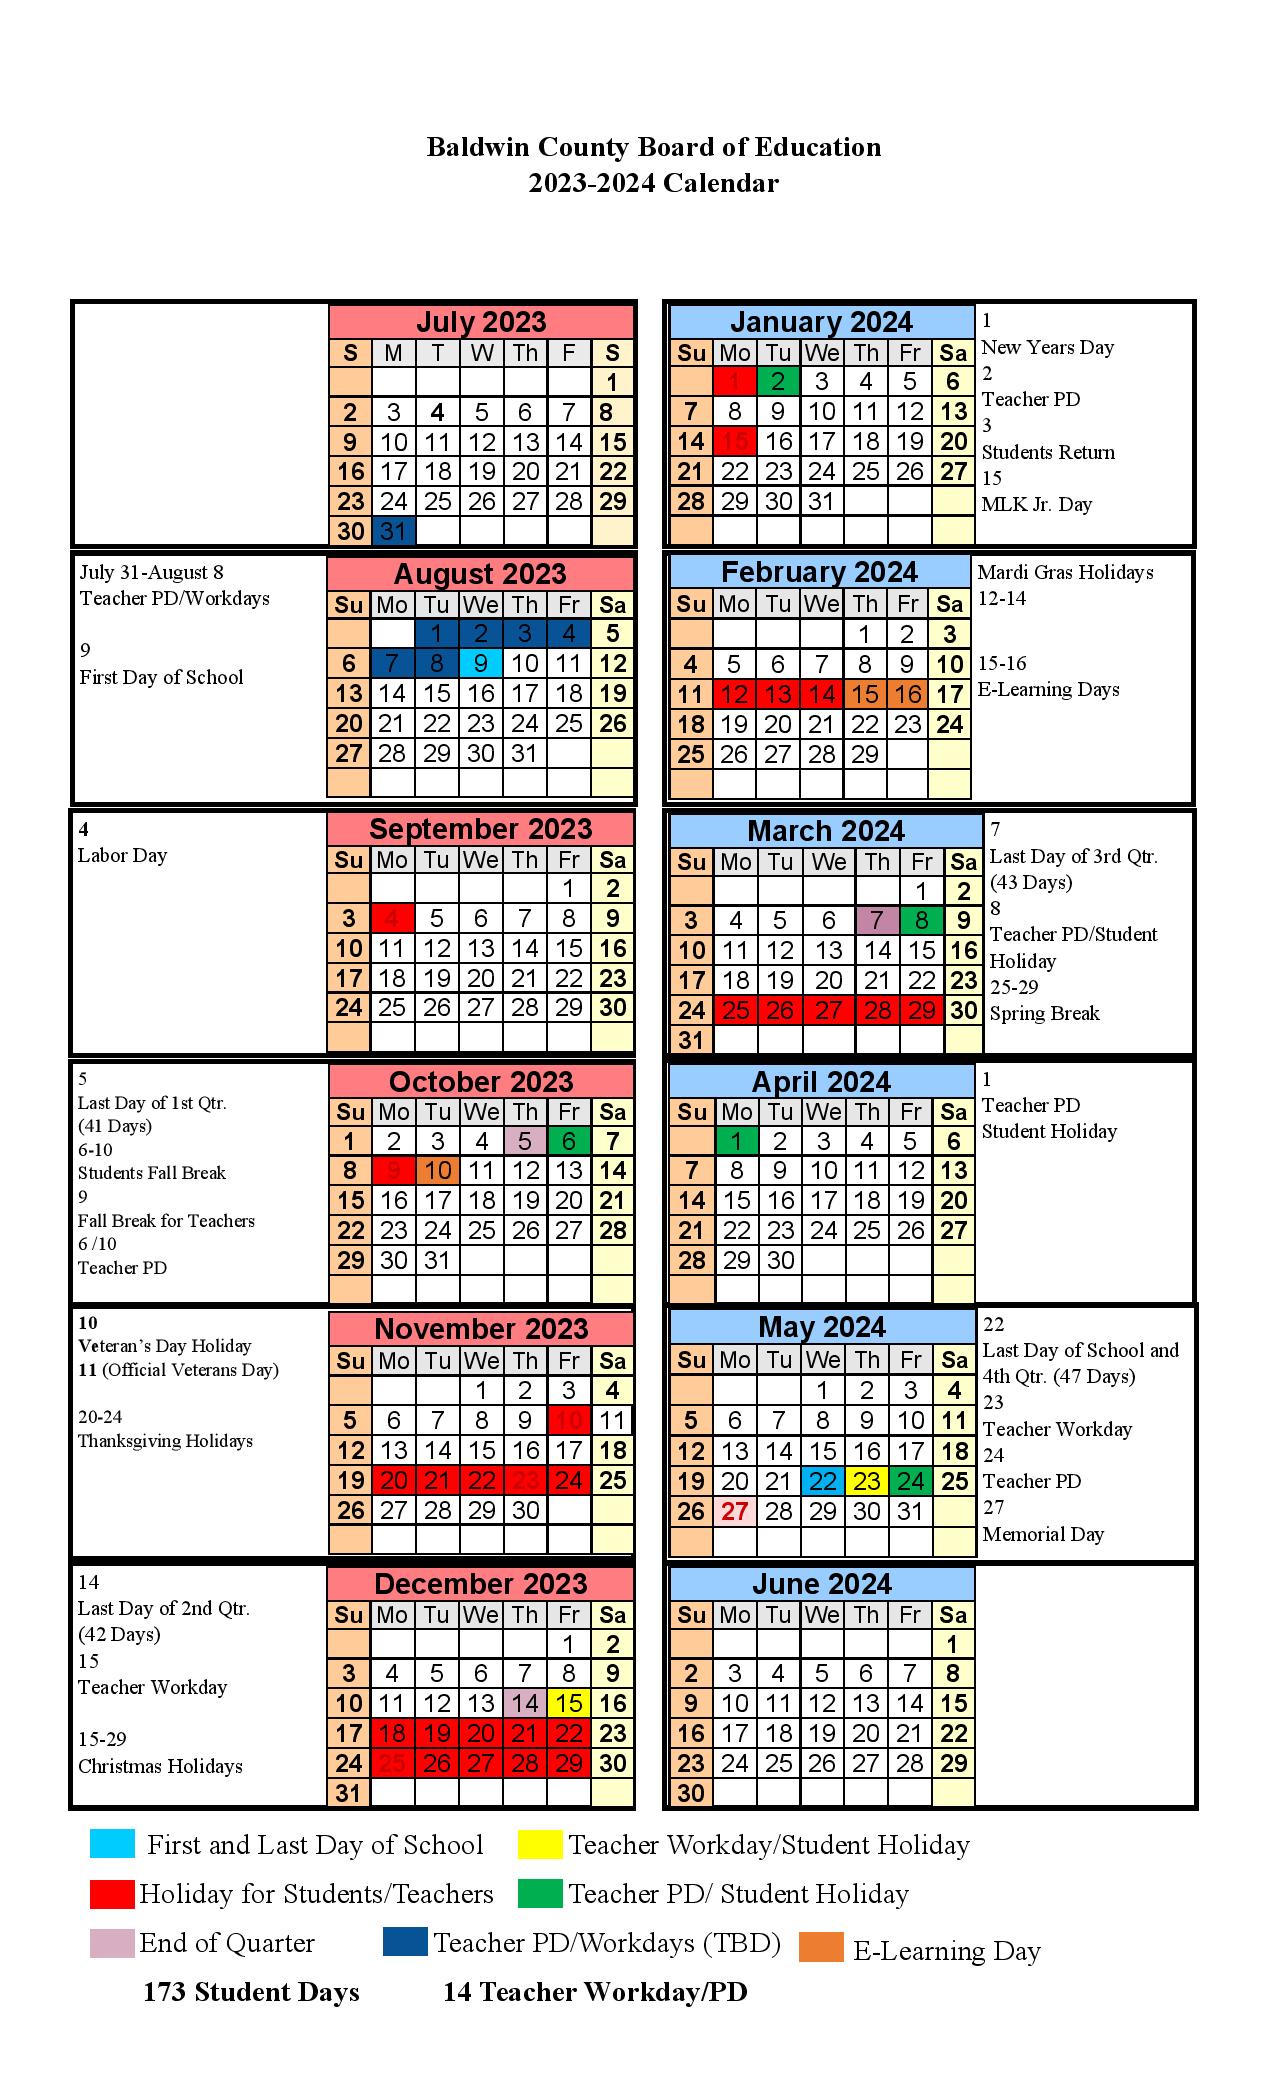 Baldwin County Public Schools Calendar 20232024 in PDF